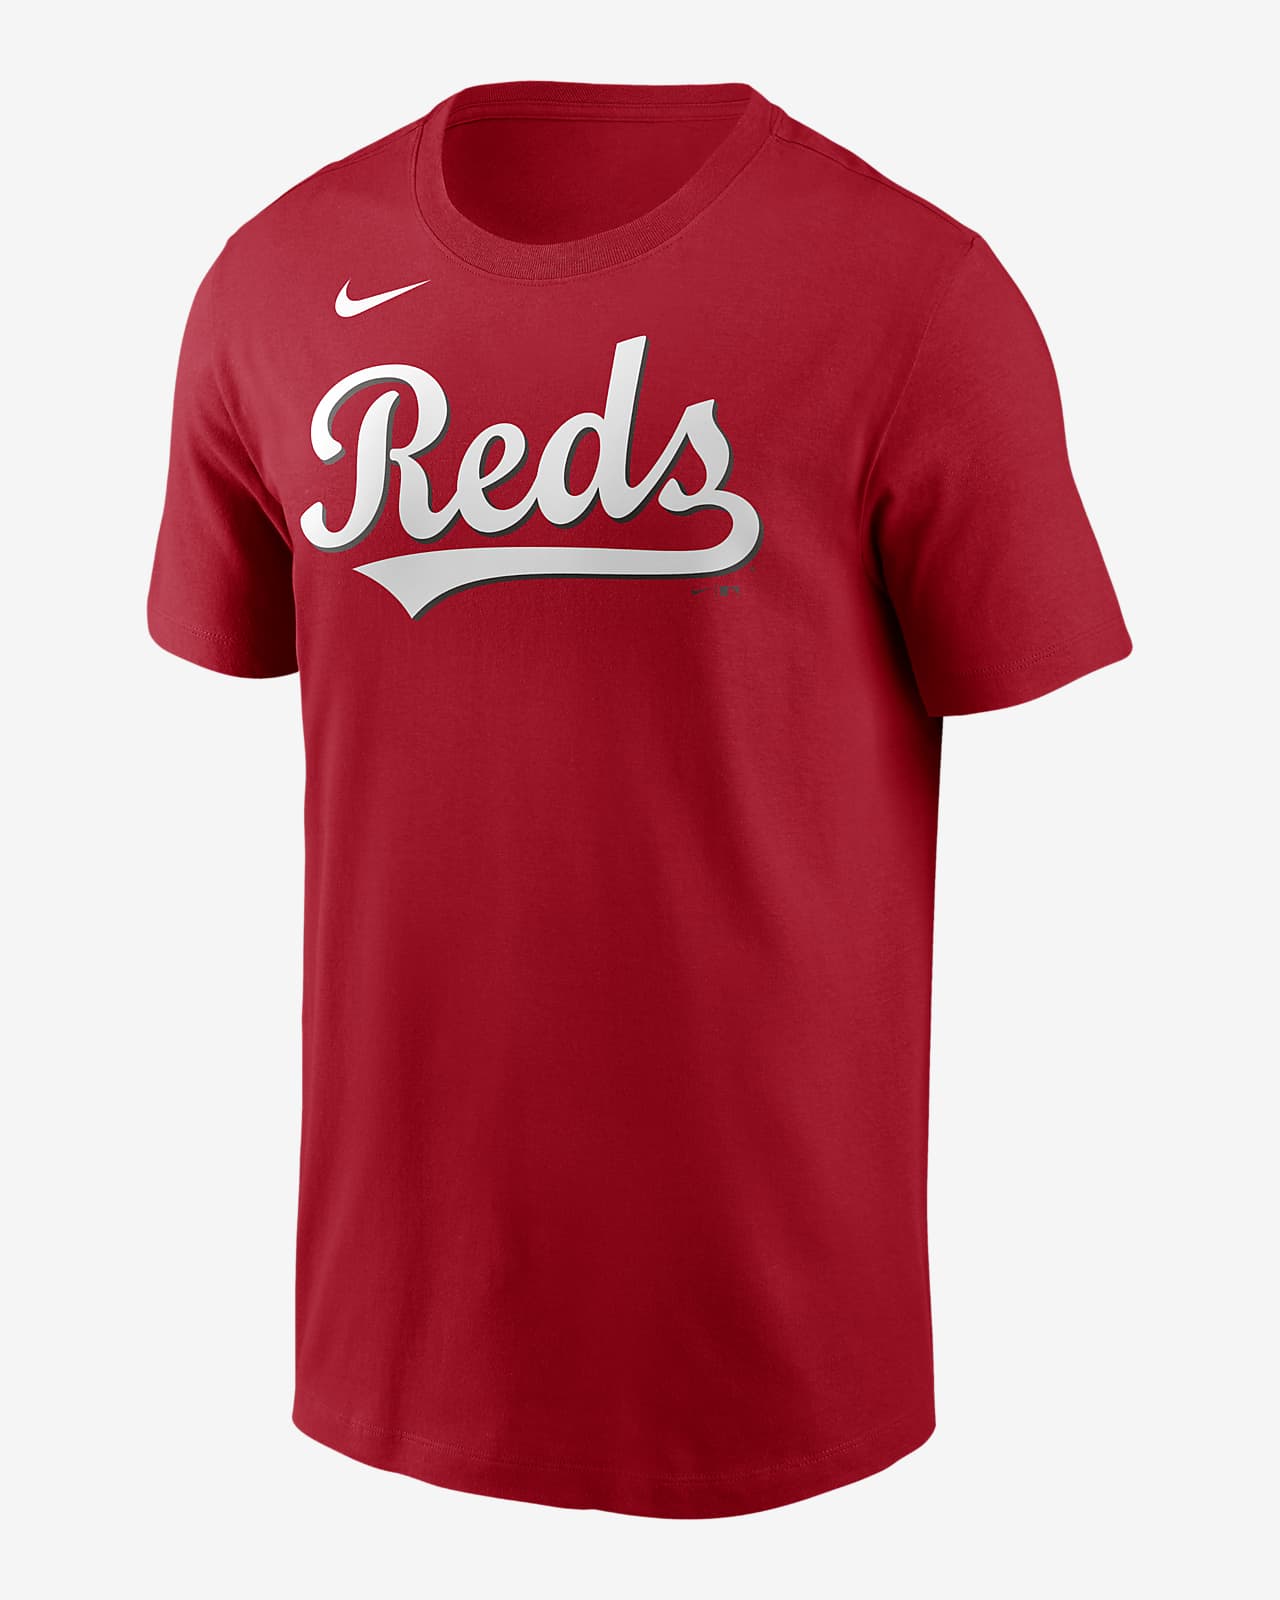 Nike Dri-FIT Team (MLB Cincinnati Reds) Men's Long-Sleeve T-Shirt.